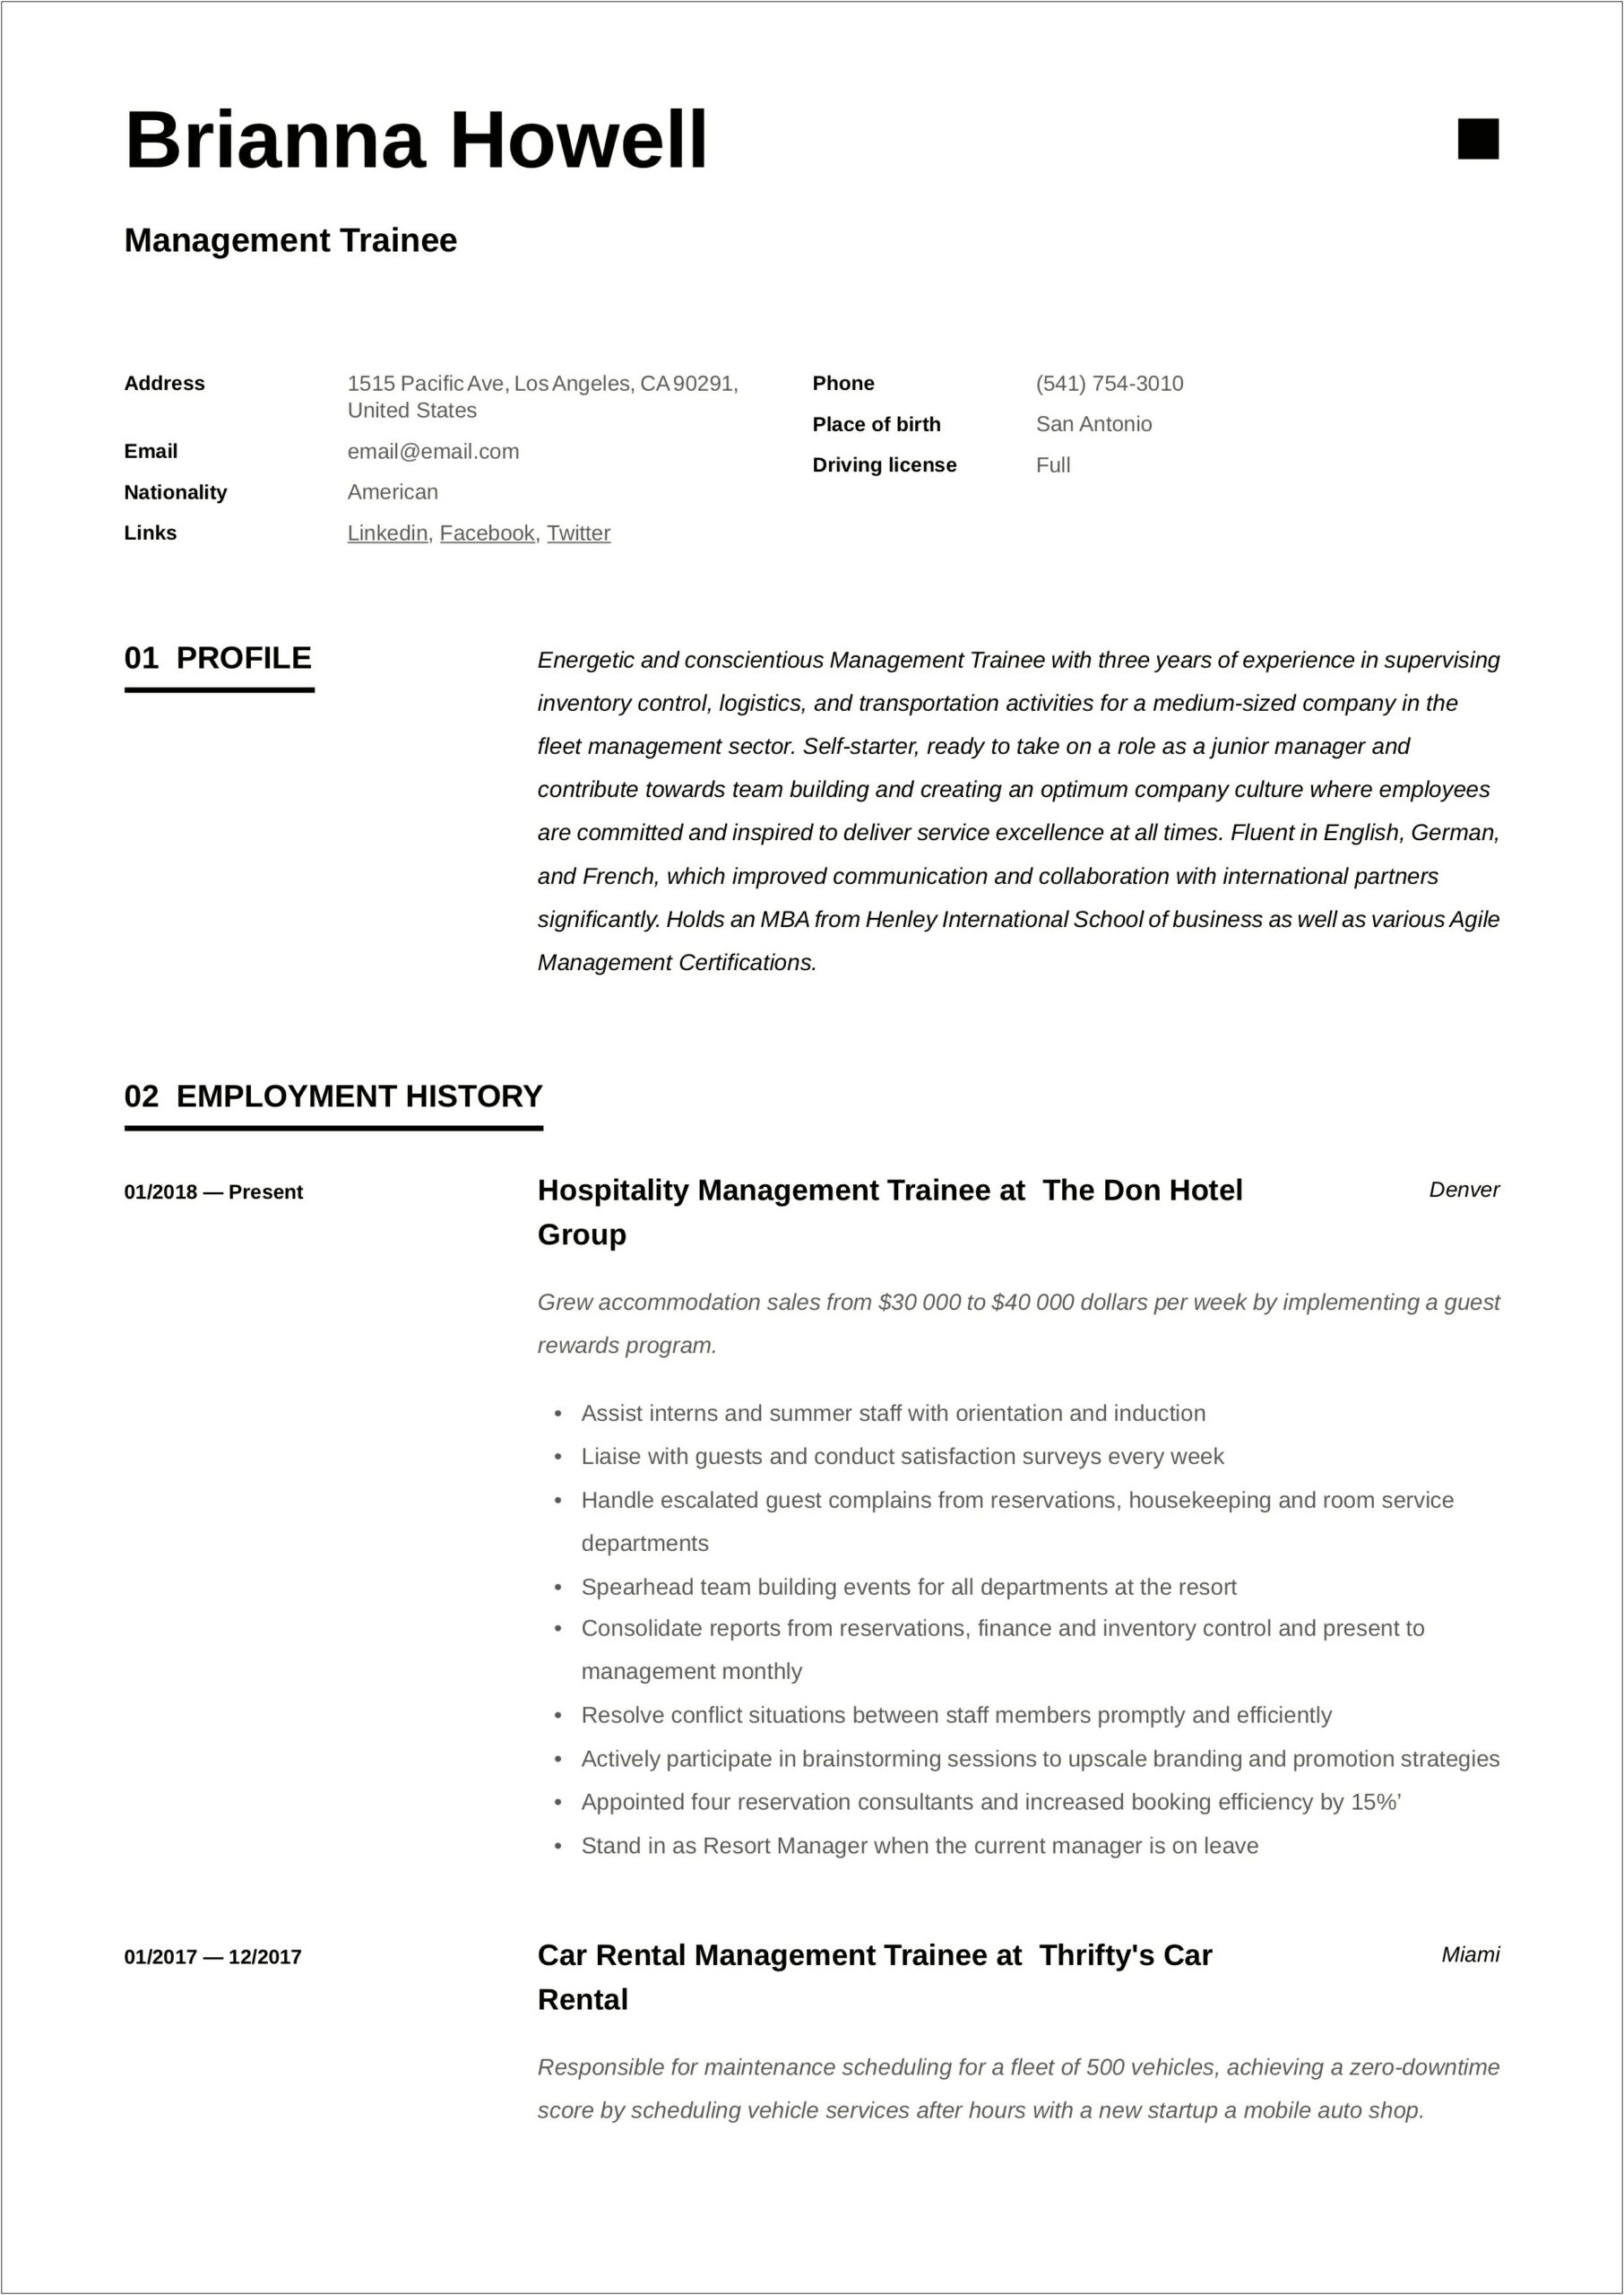 Sales Trainee Job Description For Resume